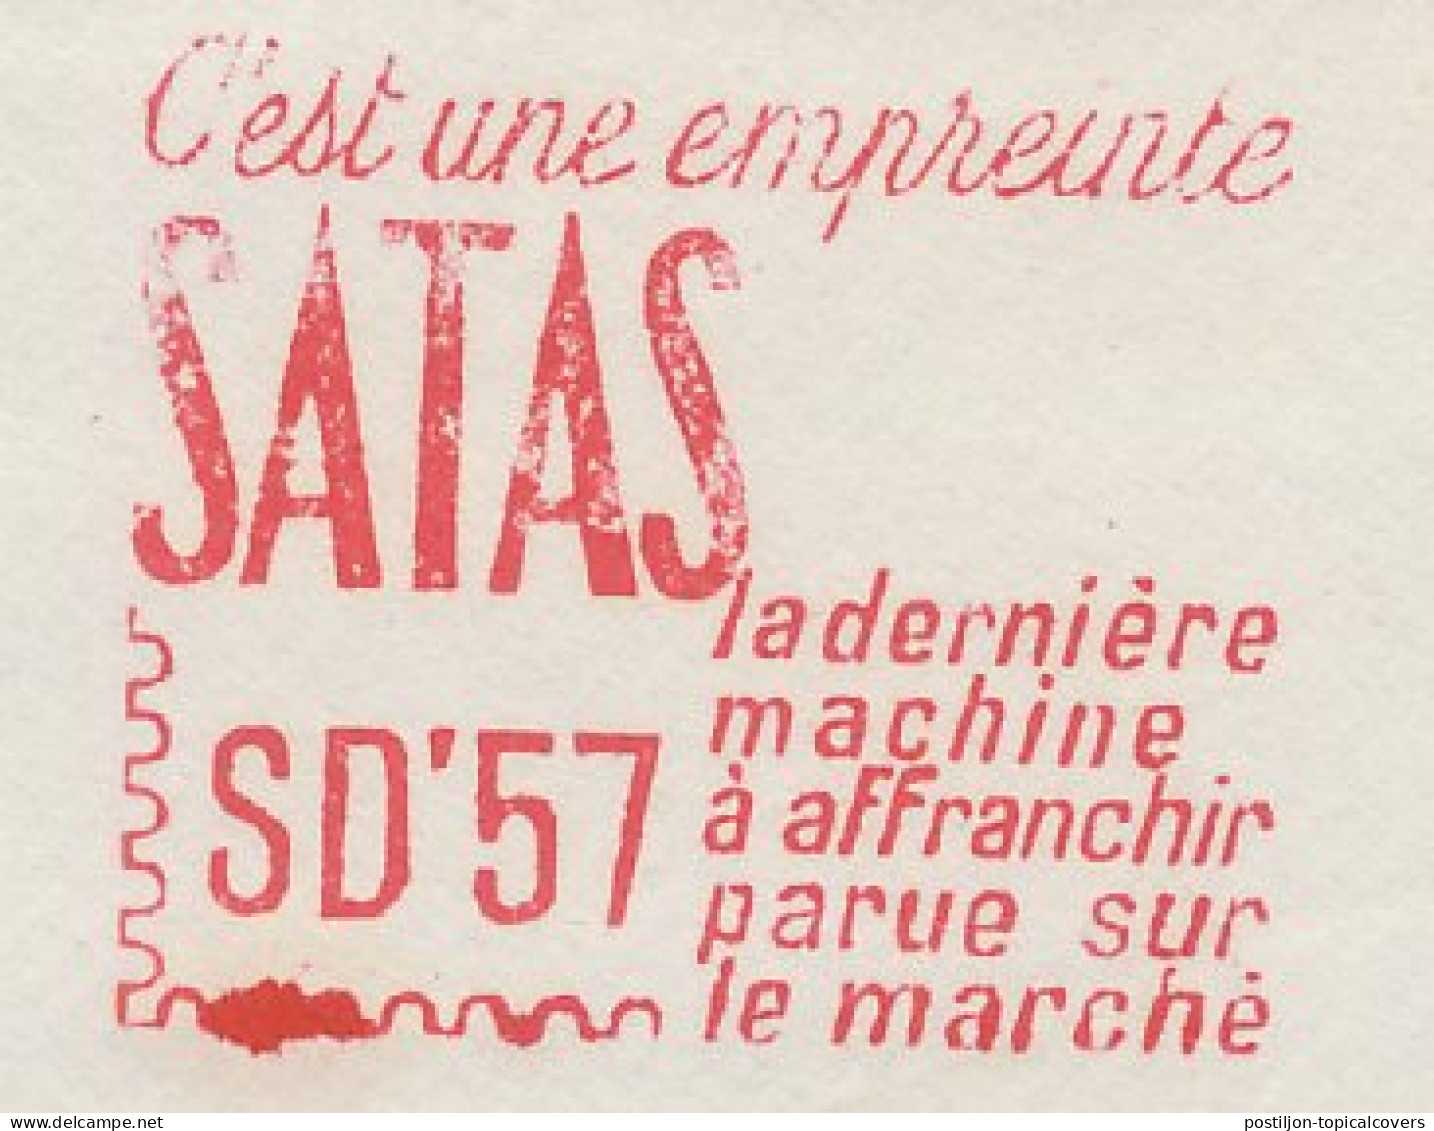 Meter Cover France 1957 SATAS - Viñetas De Franqueo [ATM]